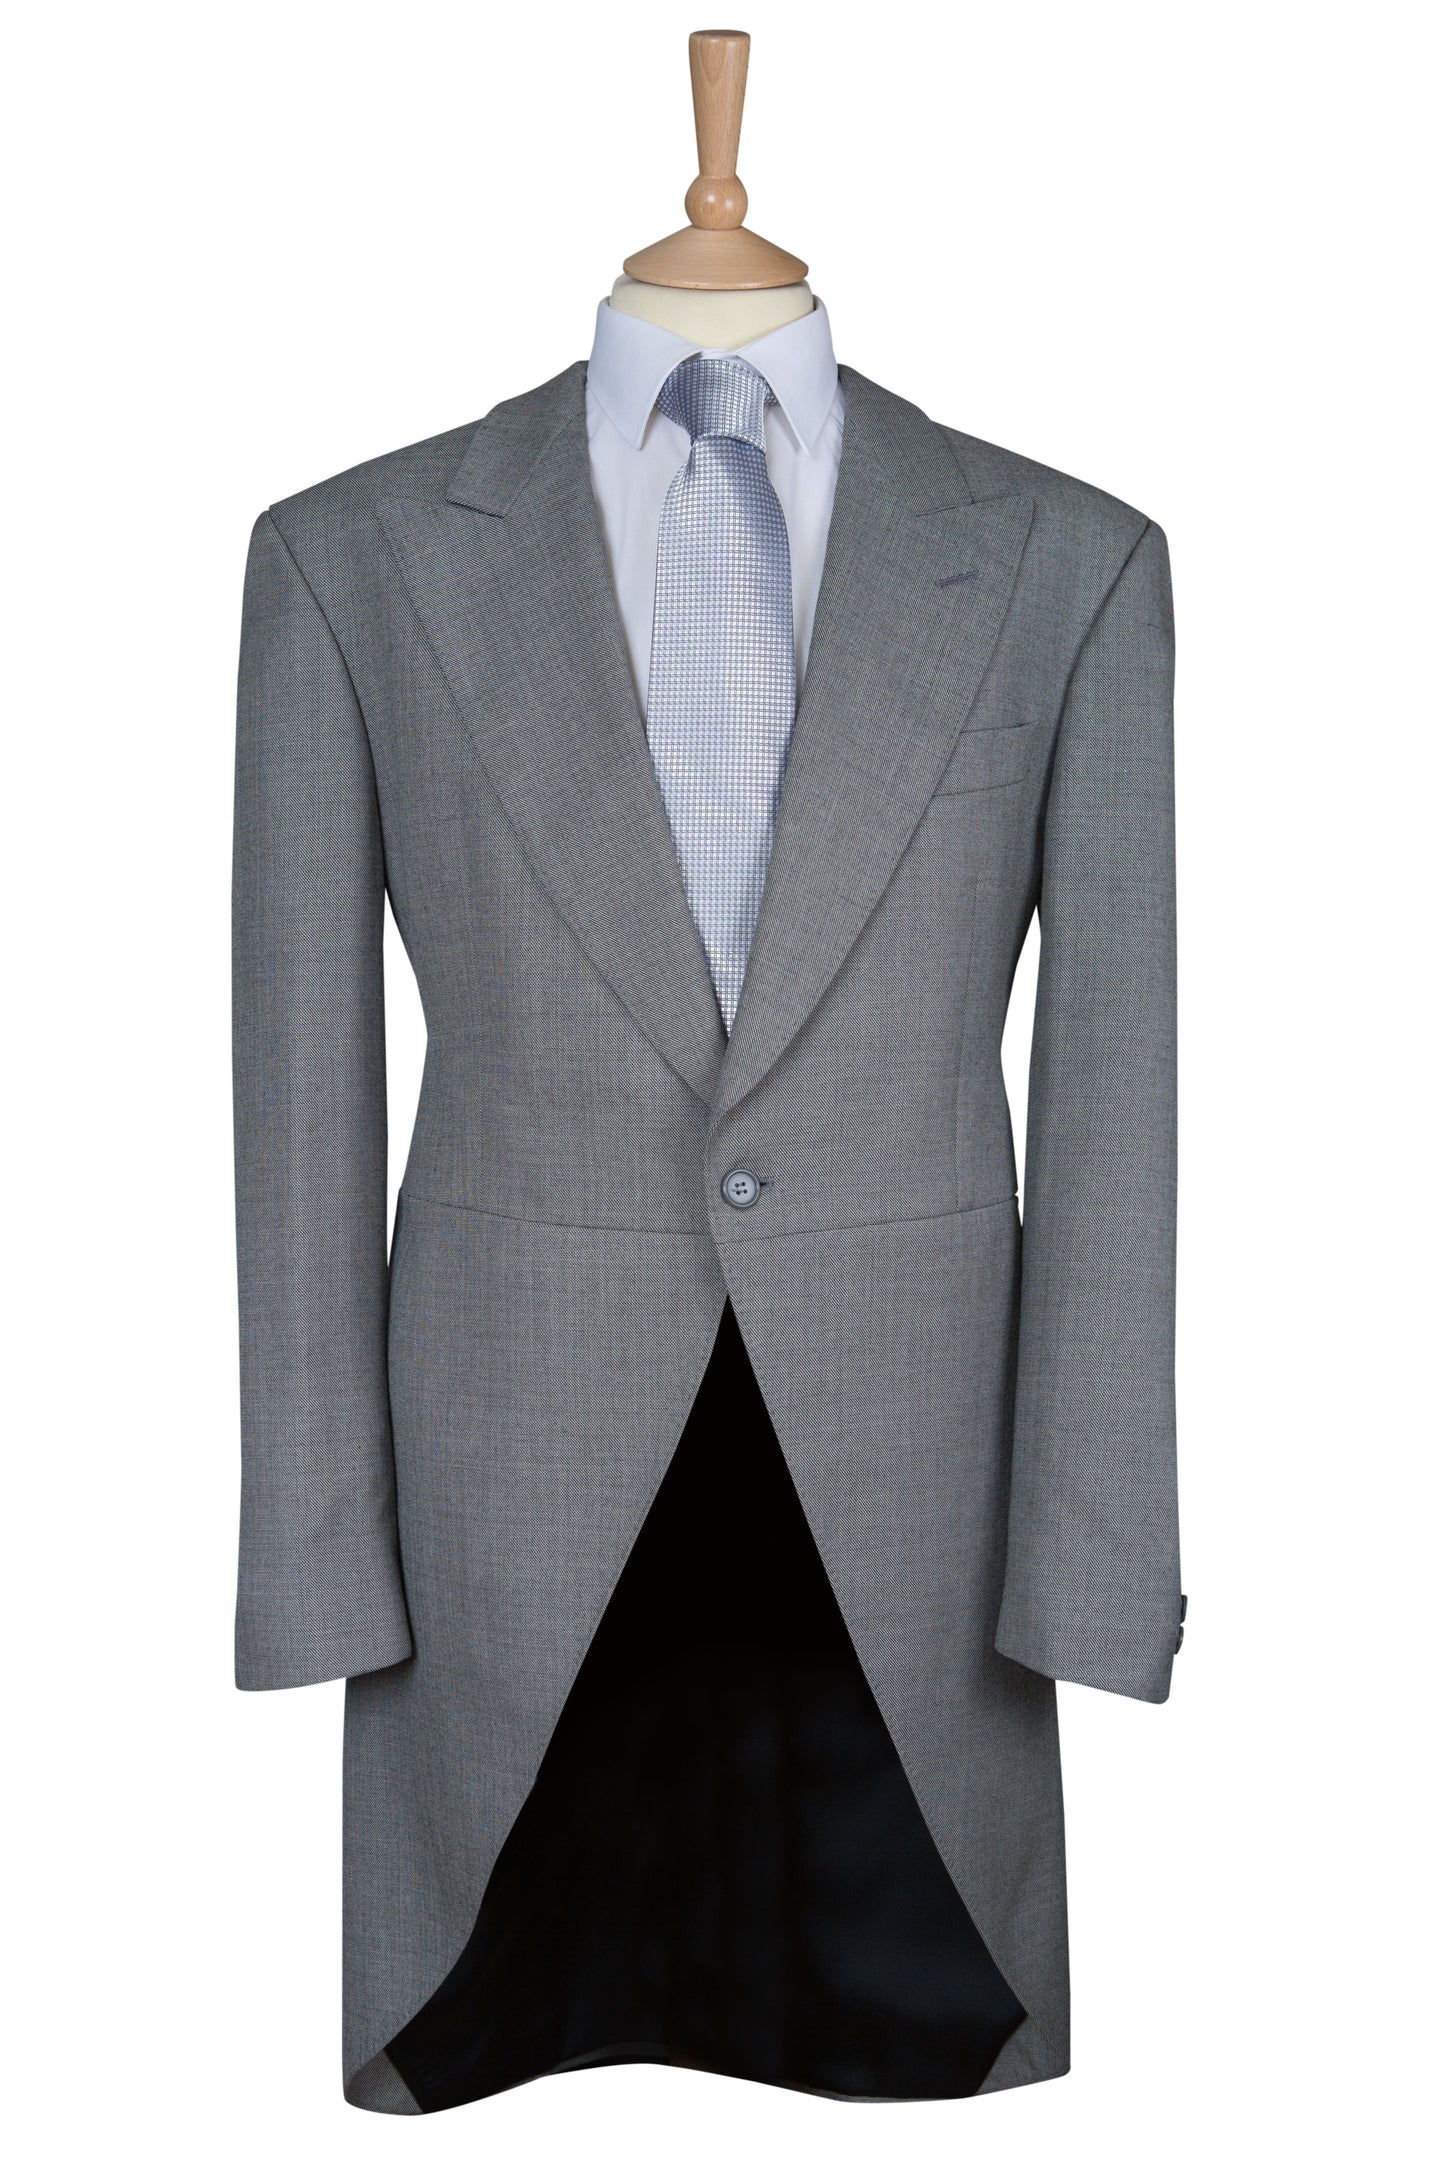 Dove Grey Tailcoat Jacket - Ex Hire